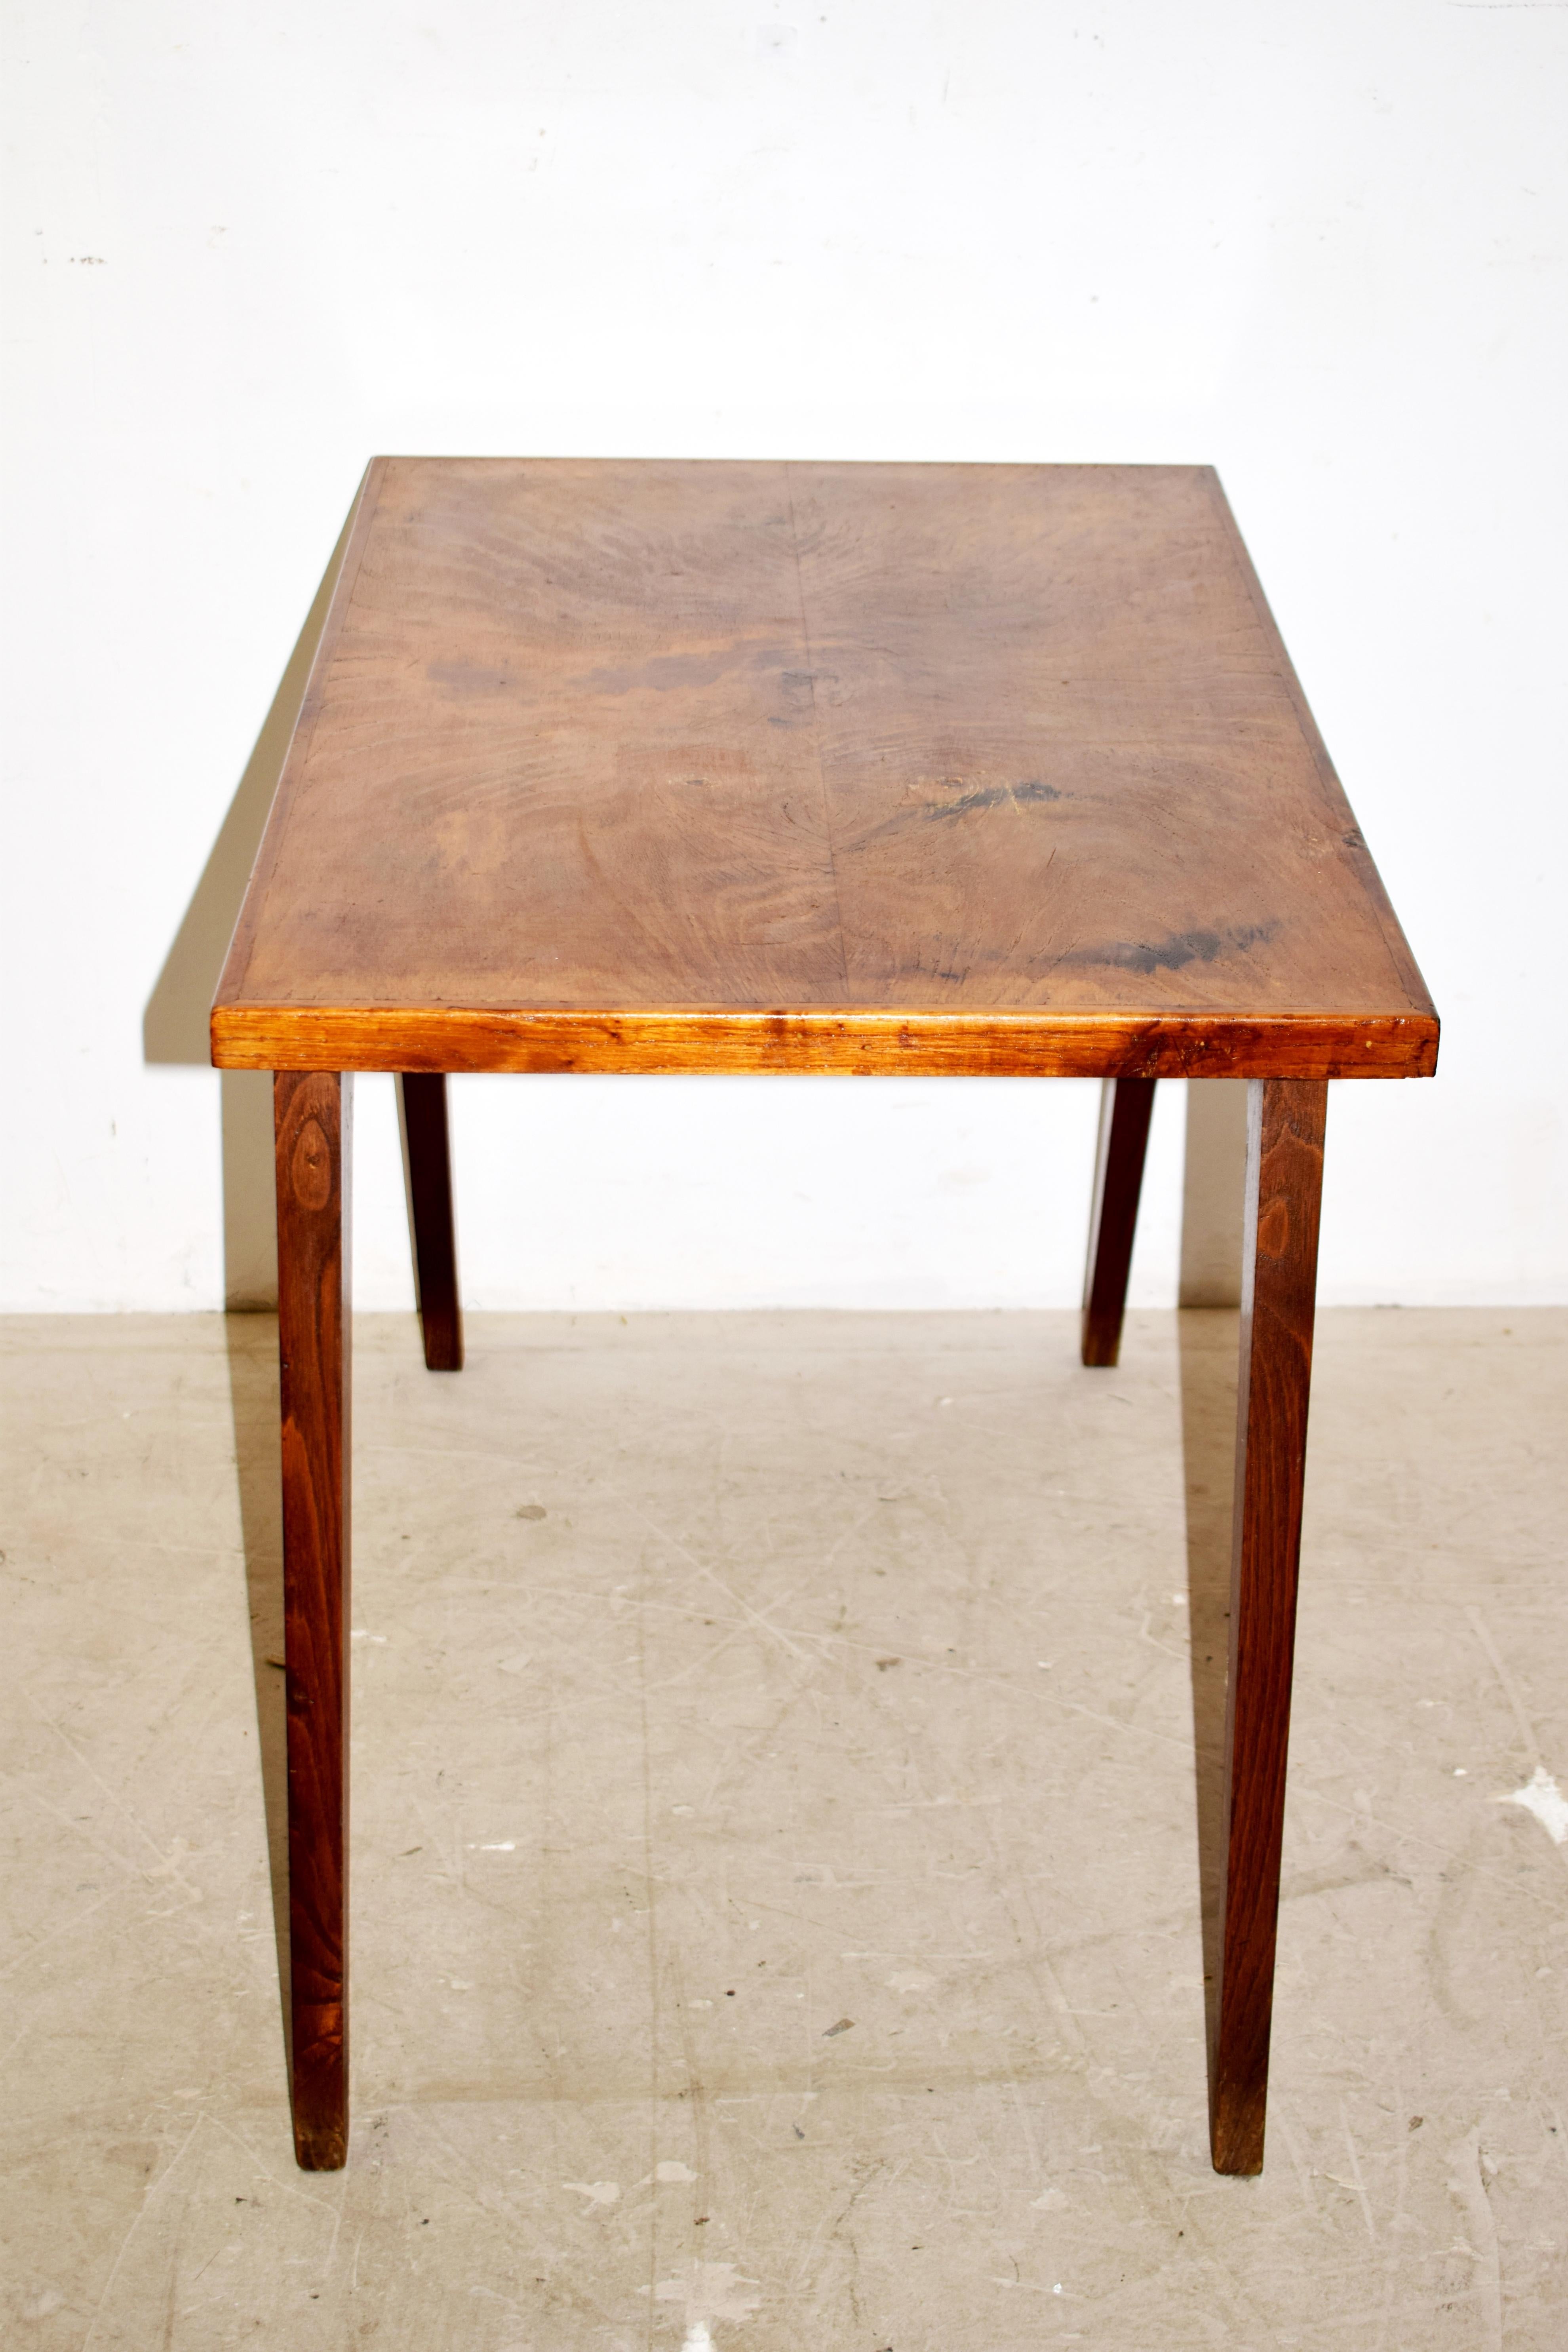 Italian coffee table, Paolo Buffa style, 1940s.
Dimensions: H= 56 cm; W=76 cm; D= 46 cm.